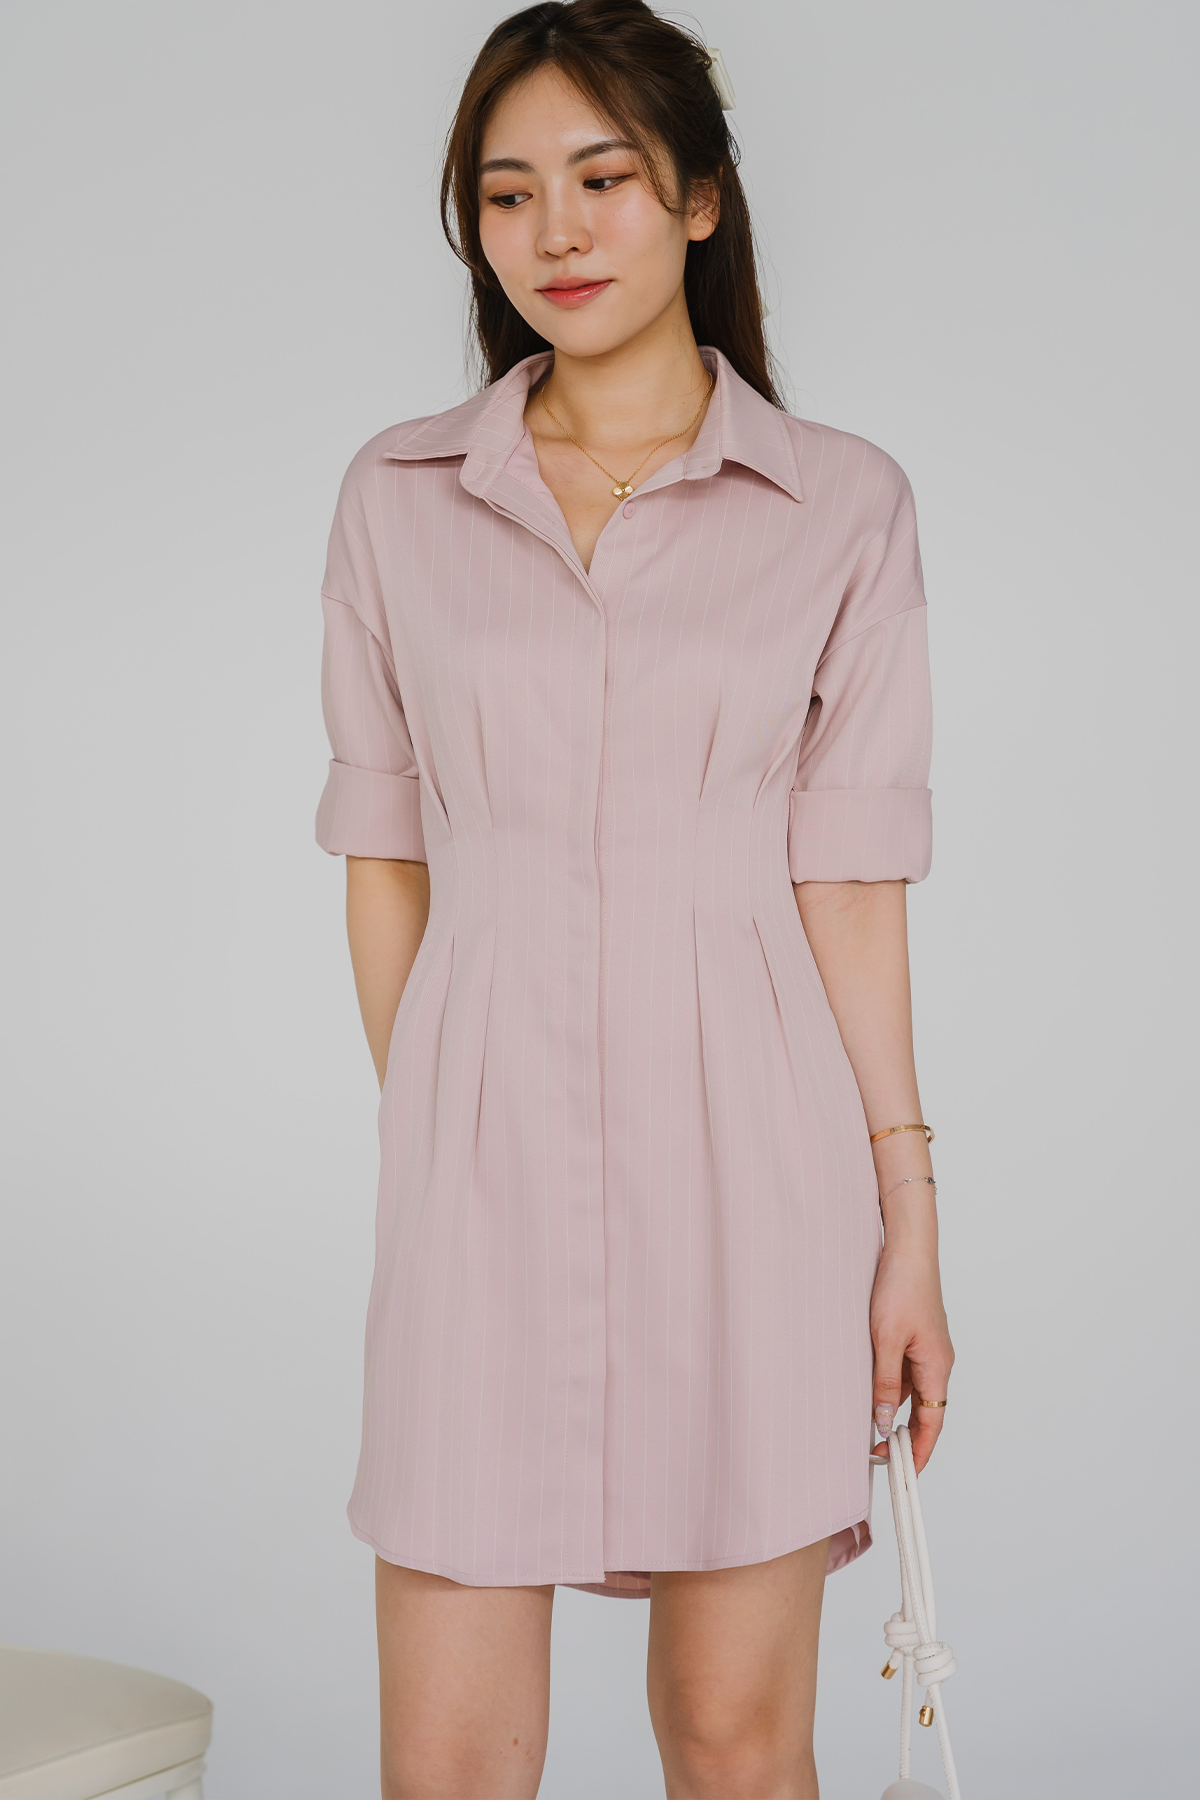 Essential Pinstripe Shirt Dress (Pink)